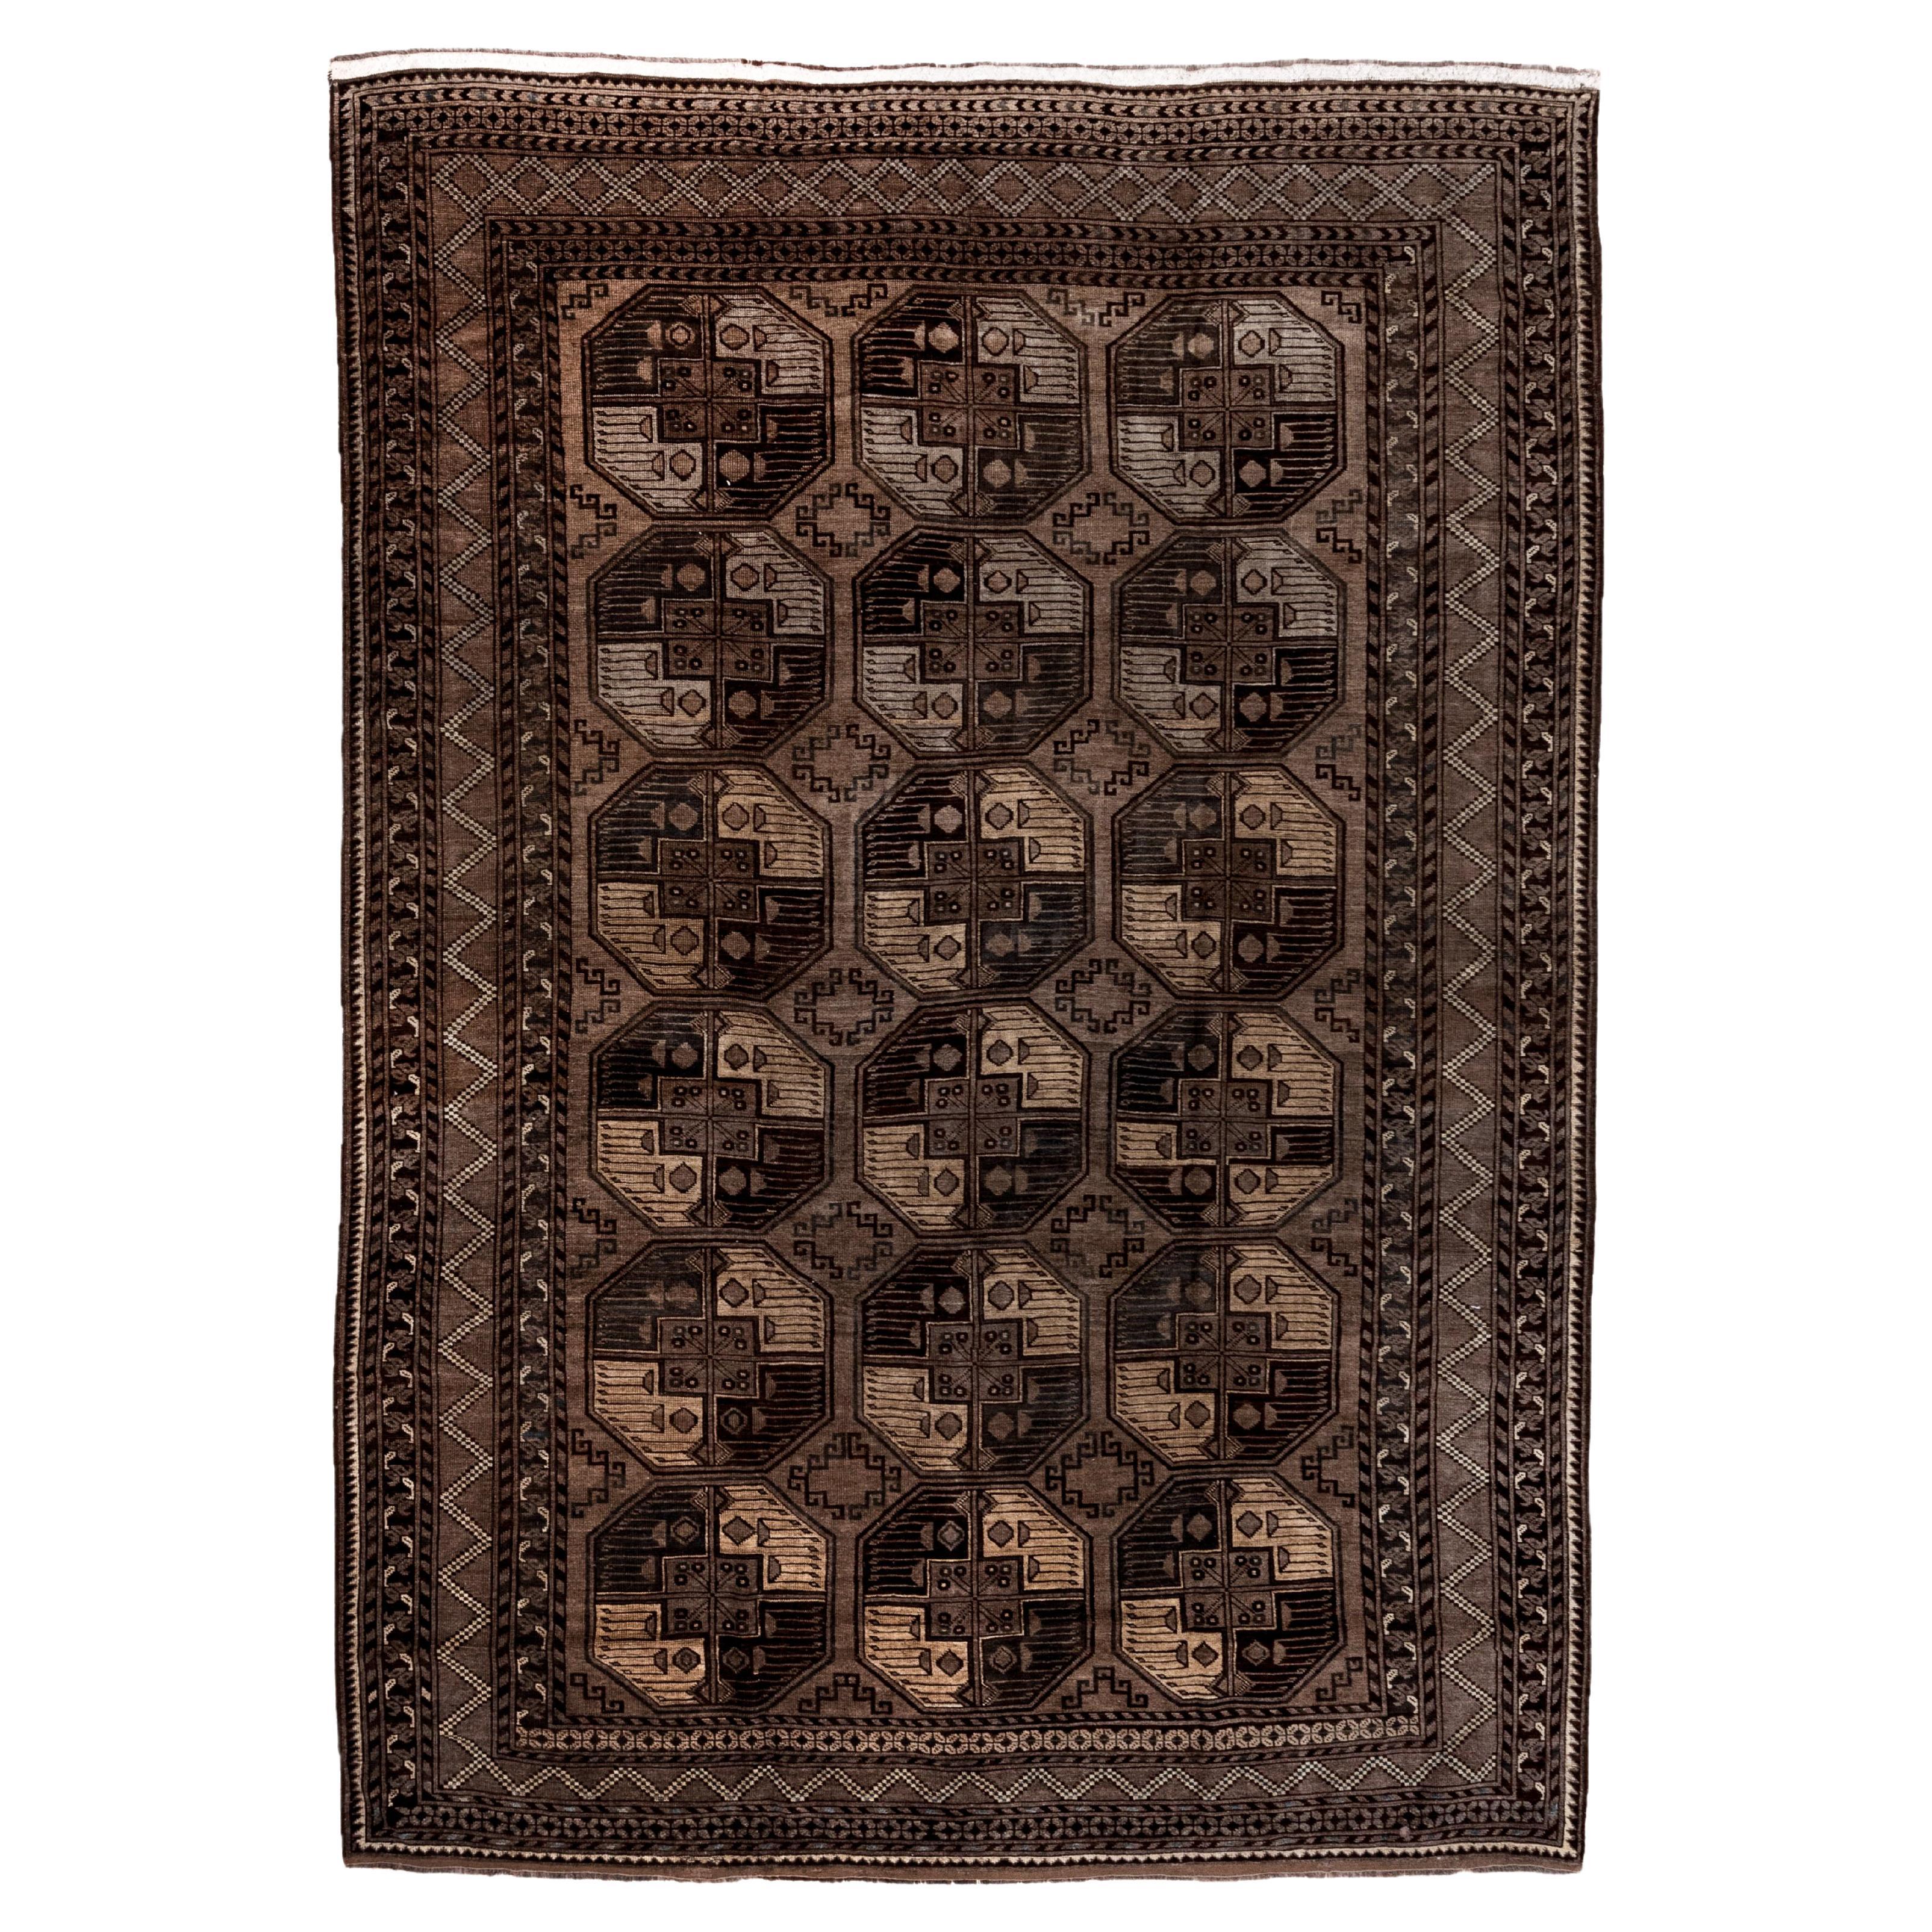 Antique Afghan Ersari Carpet, Turkmen Pattern, Circa 1930s, Brown & Gold Tones